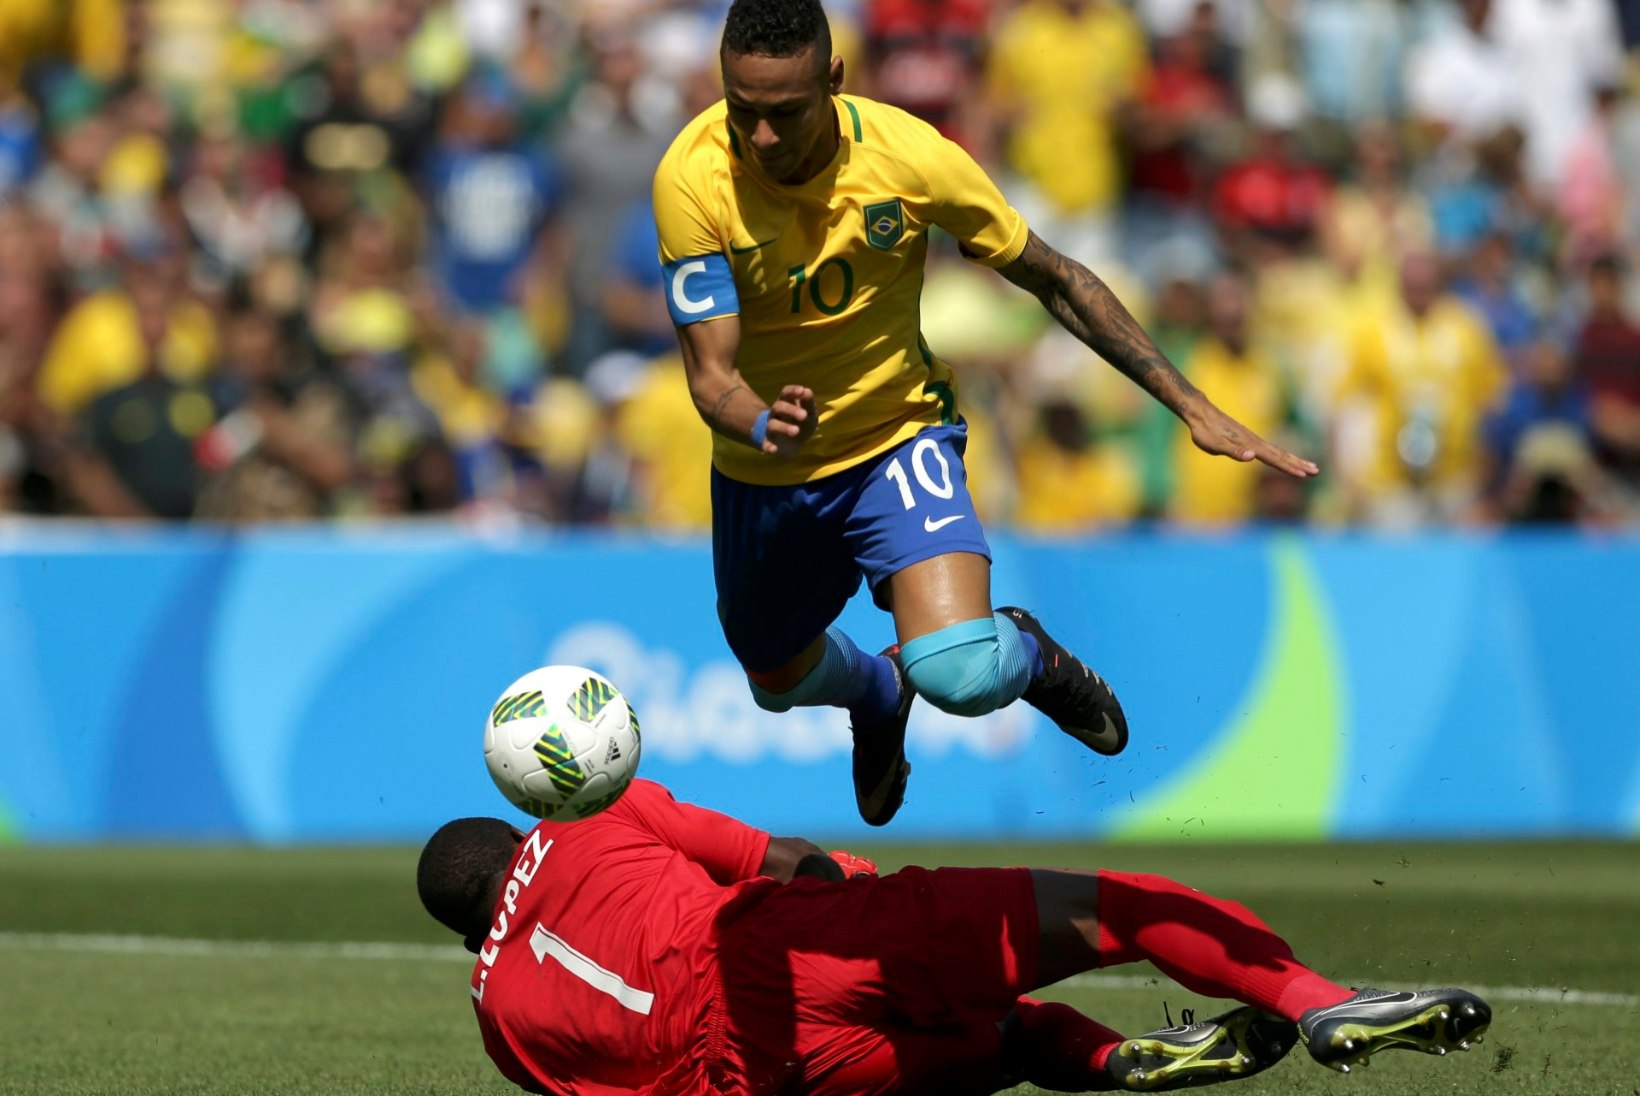 ÕL RIOS | Brasiillaste joga bonito tampis poolfinaalis Hondurase šnitsliks!